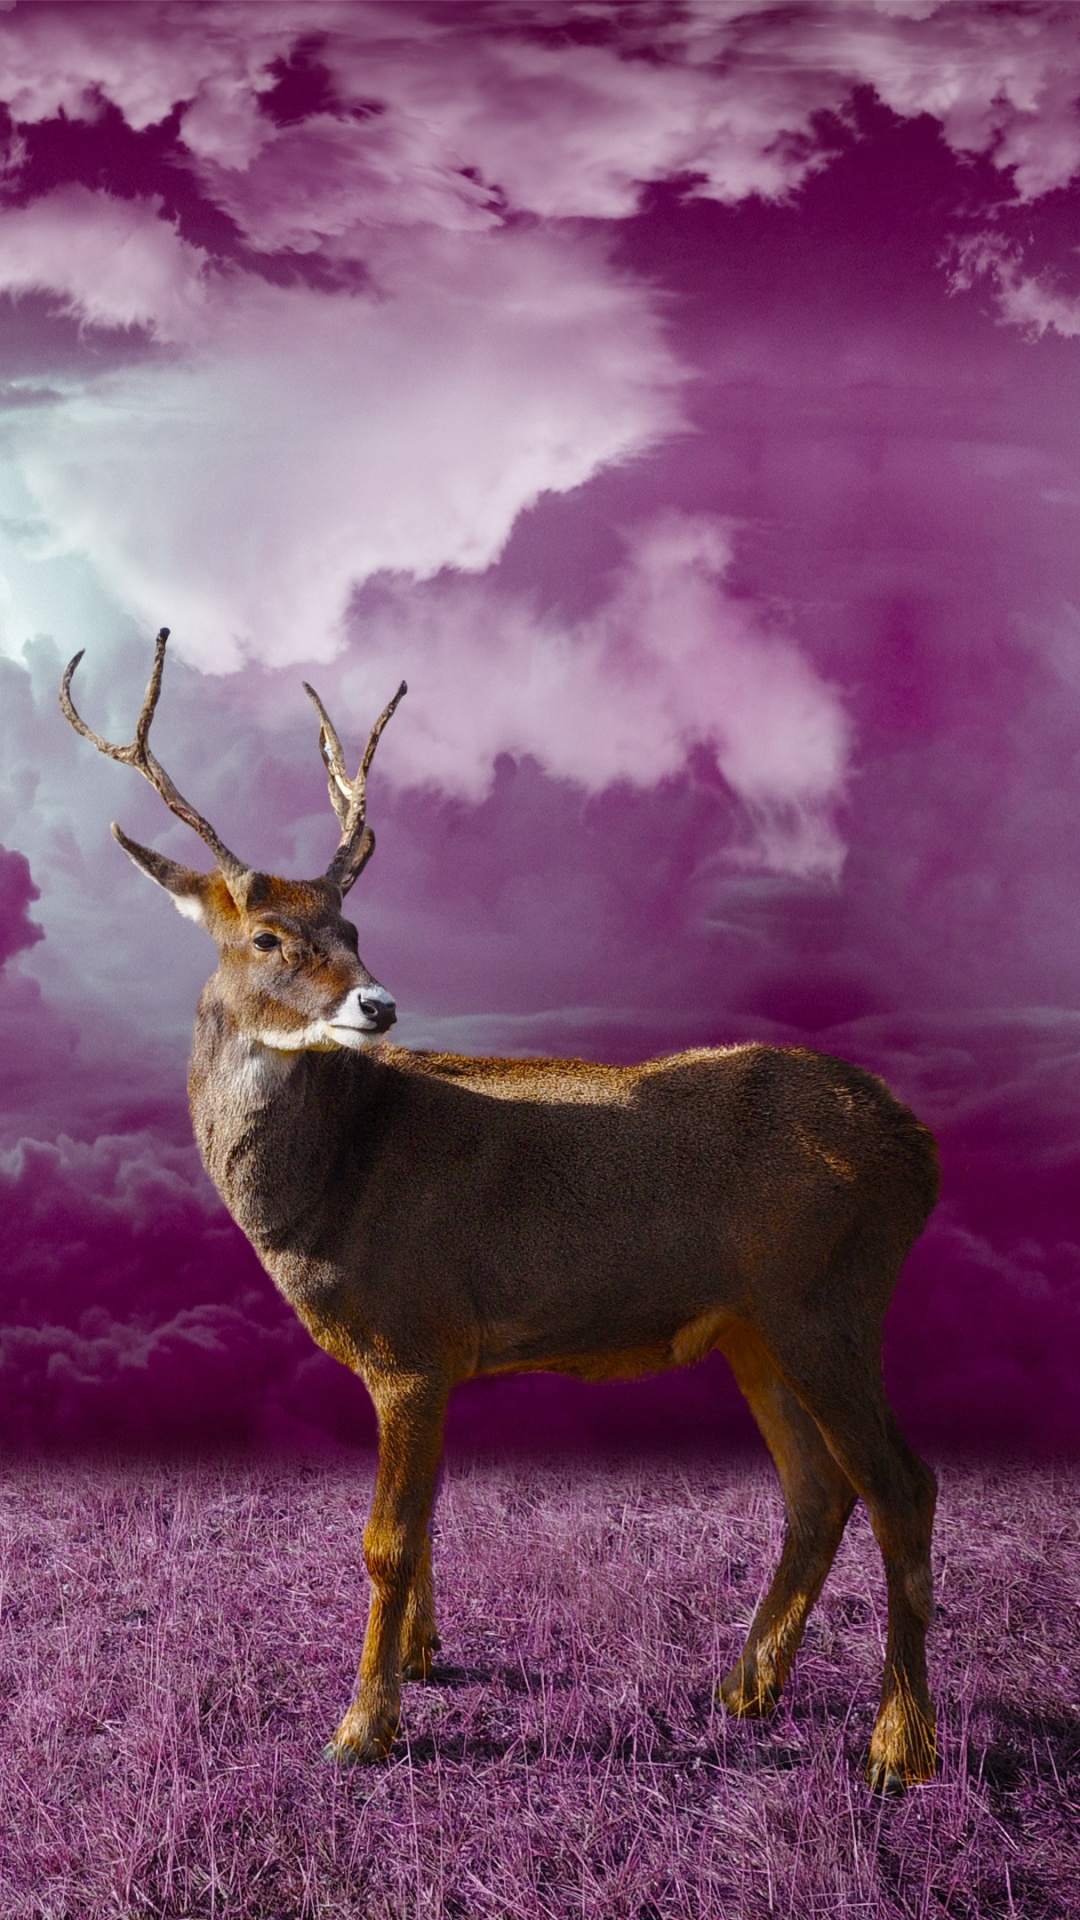 Brown Deer on Brown Grass Field Under Cloudy Sky. Wallpaper in 1080x1920 Resolution